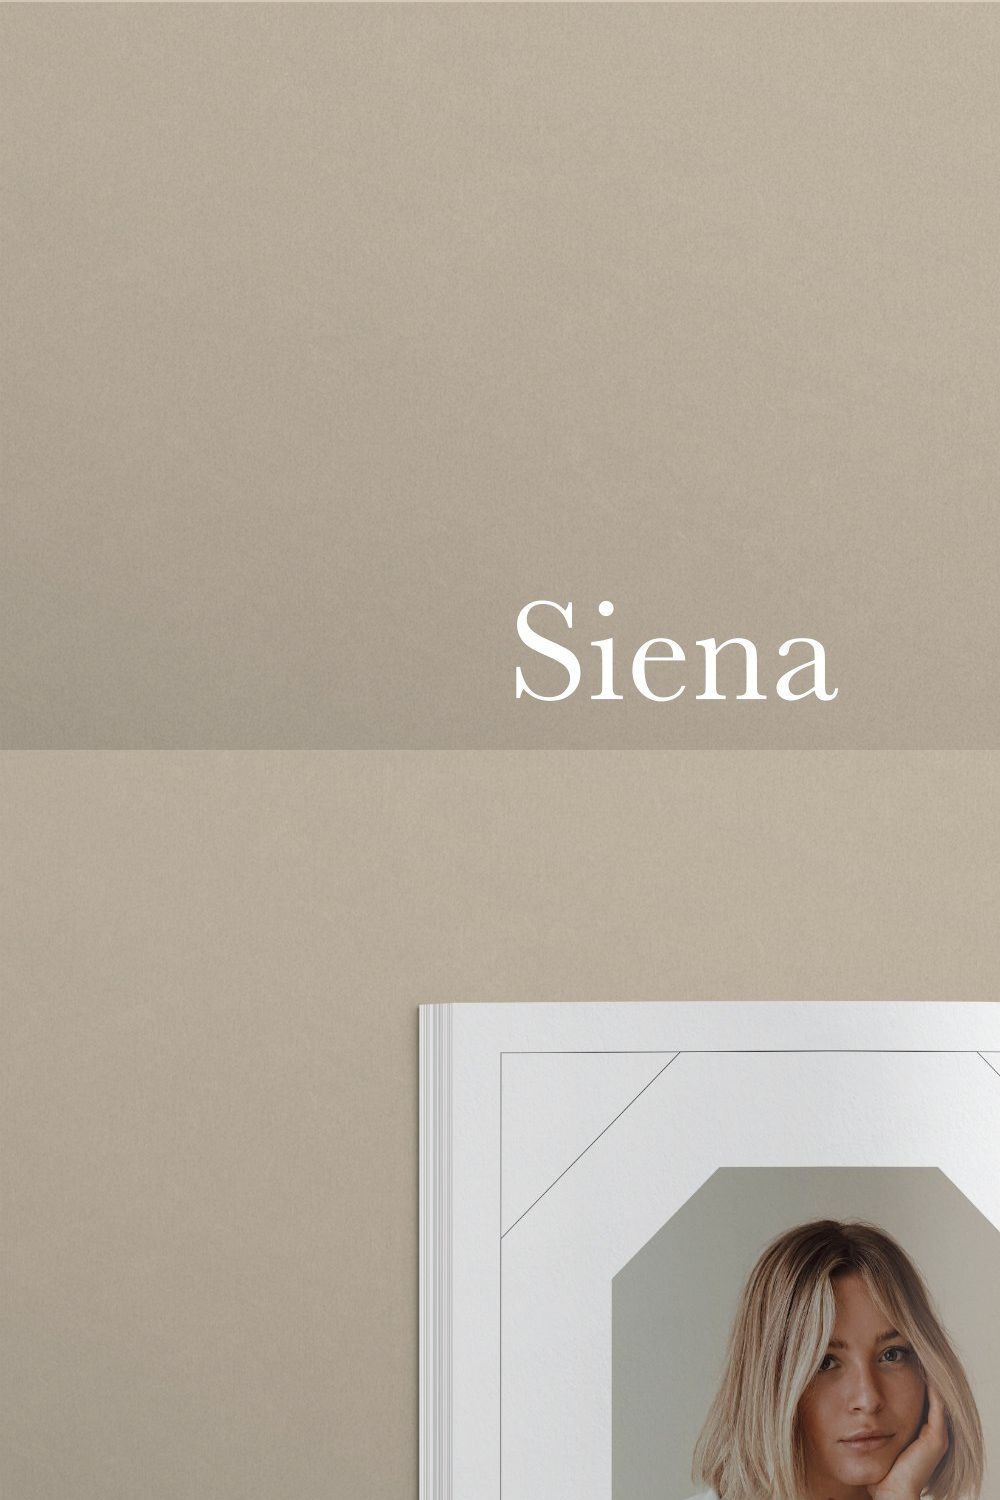 Siena Magazine pinterest preview image.